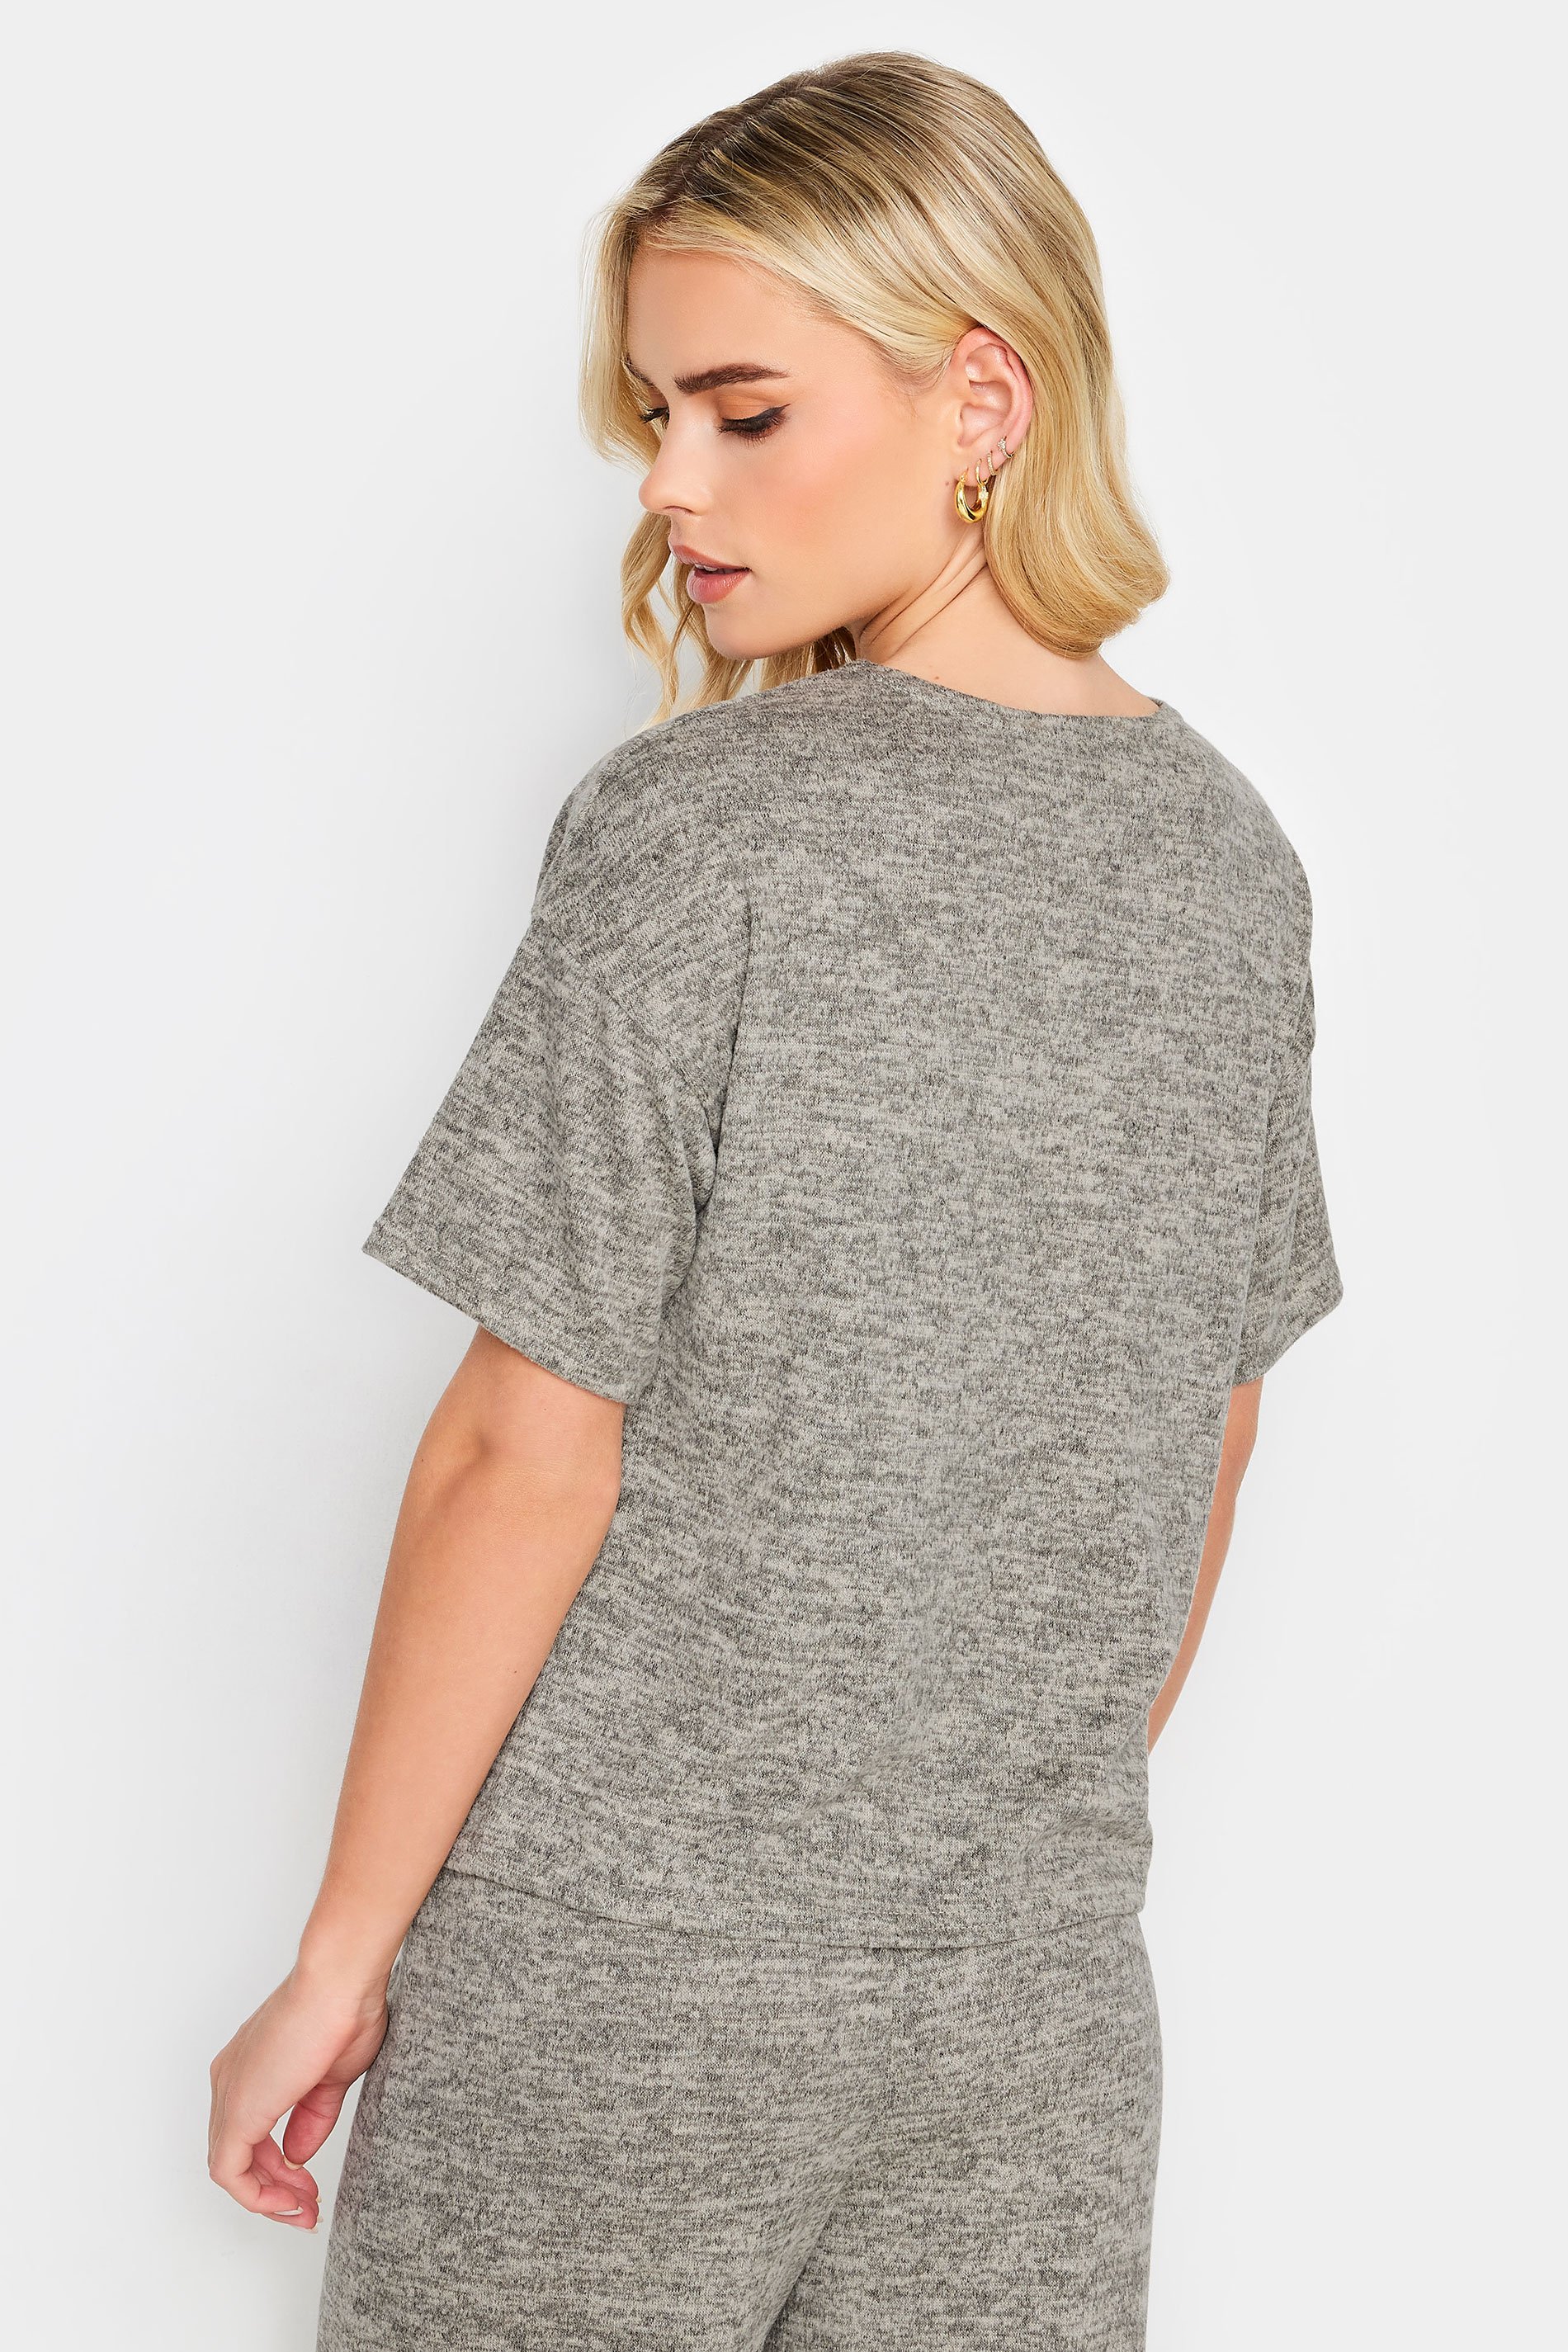 PixieGirl Neutral Brown Short Sleeve T-Shirt | PixieGirl  3